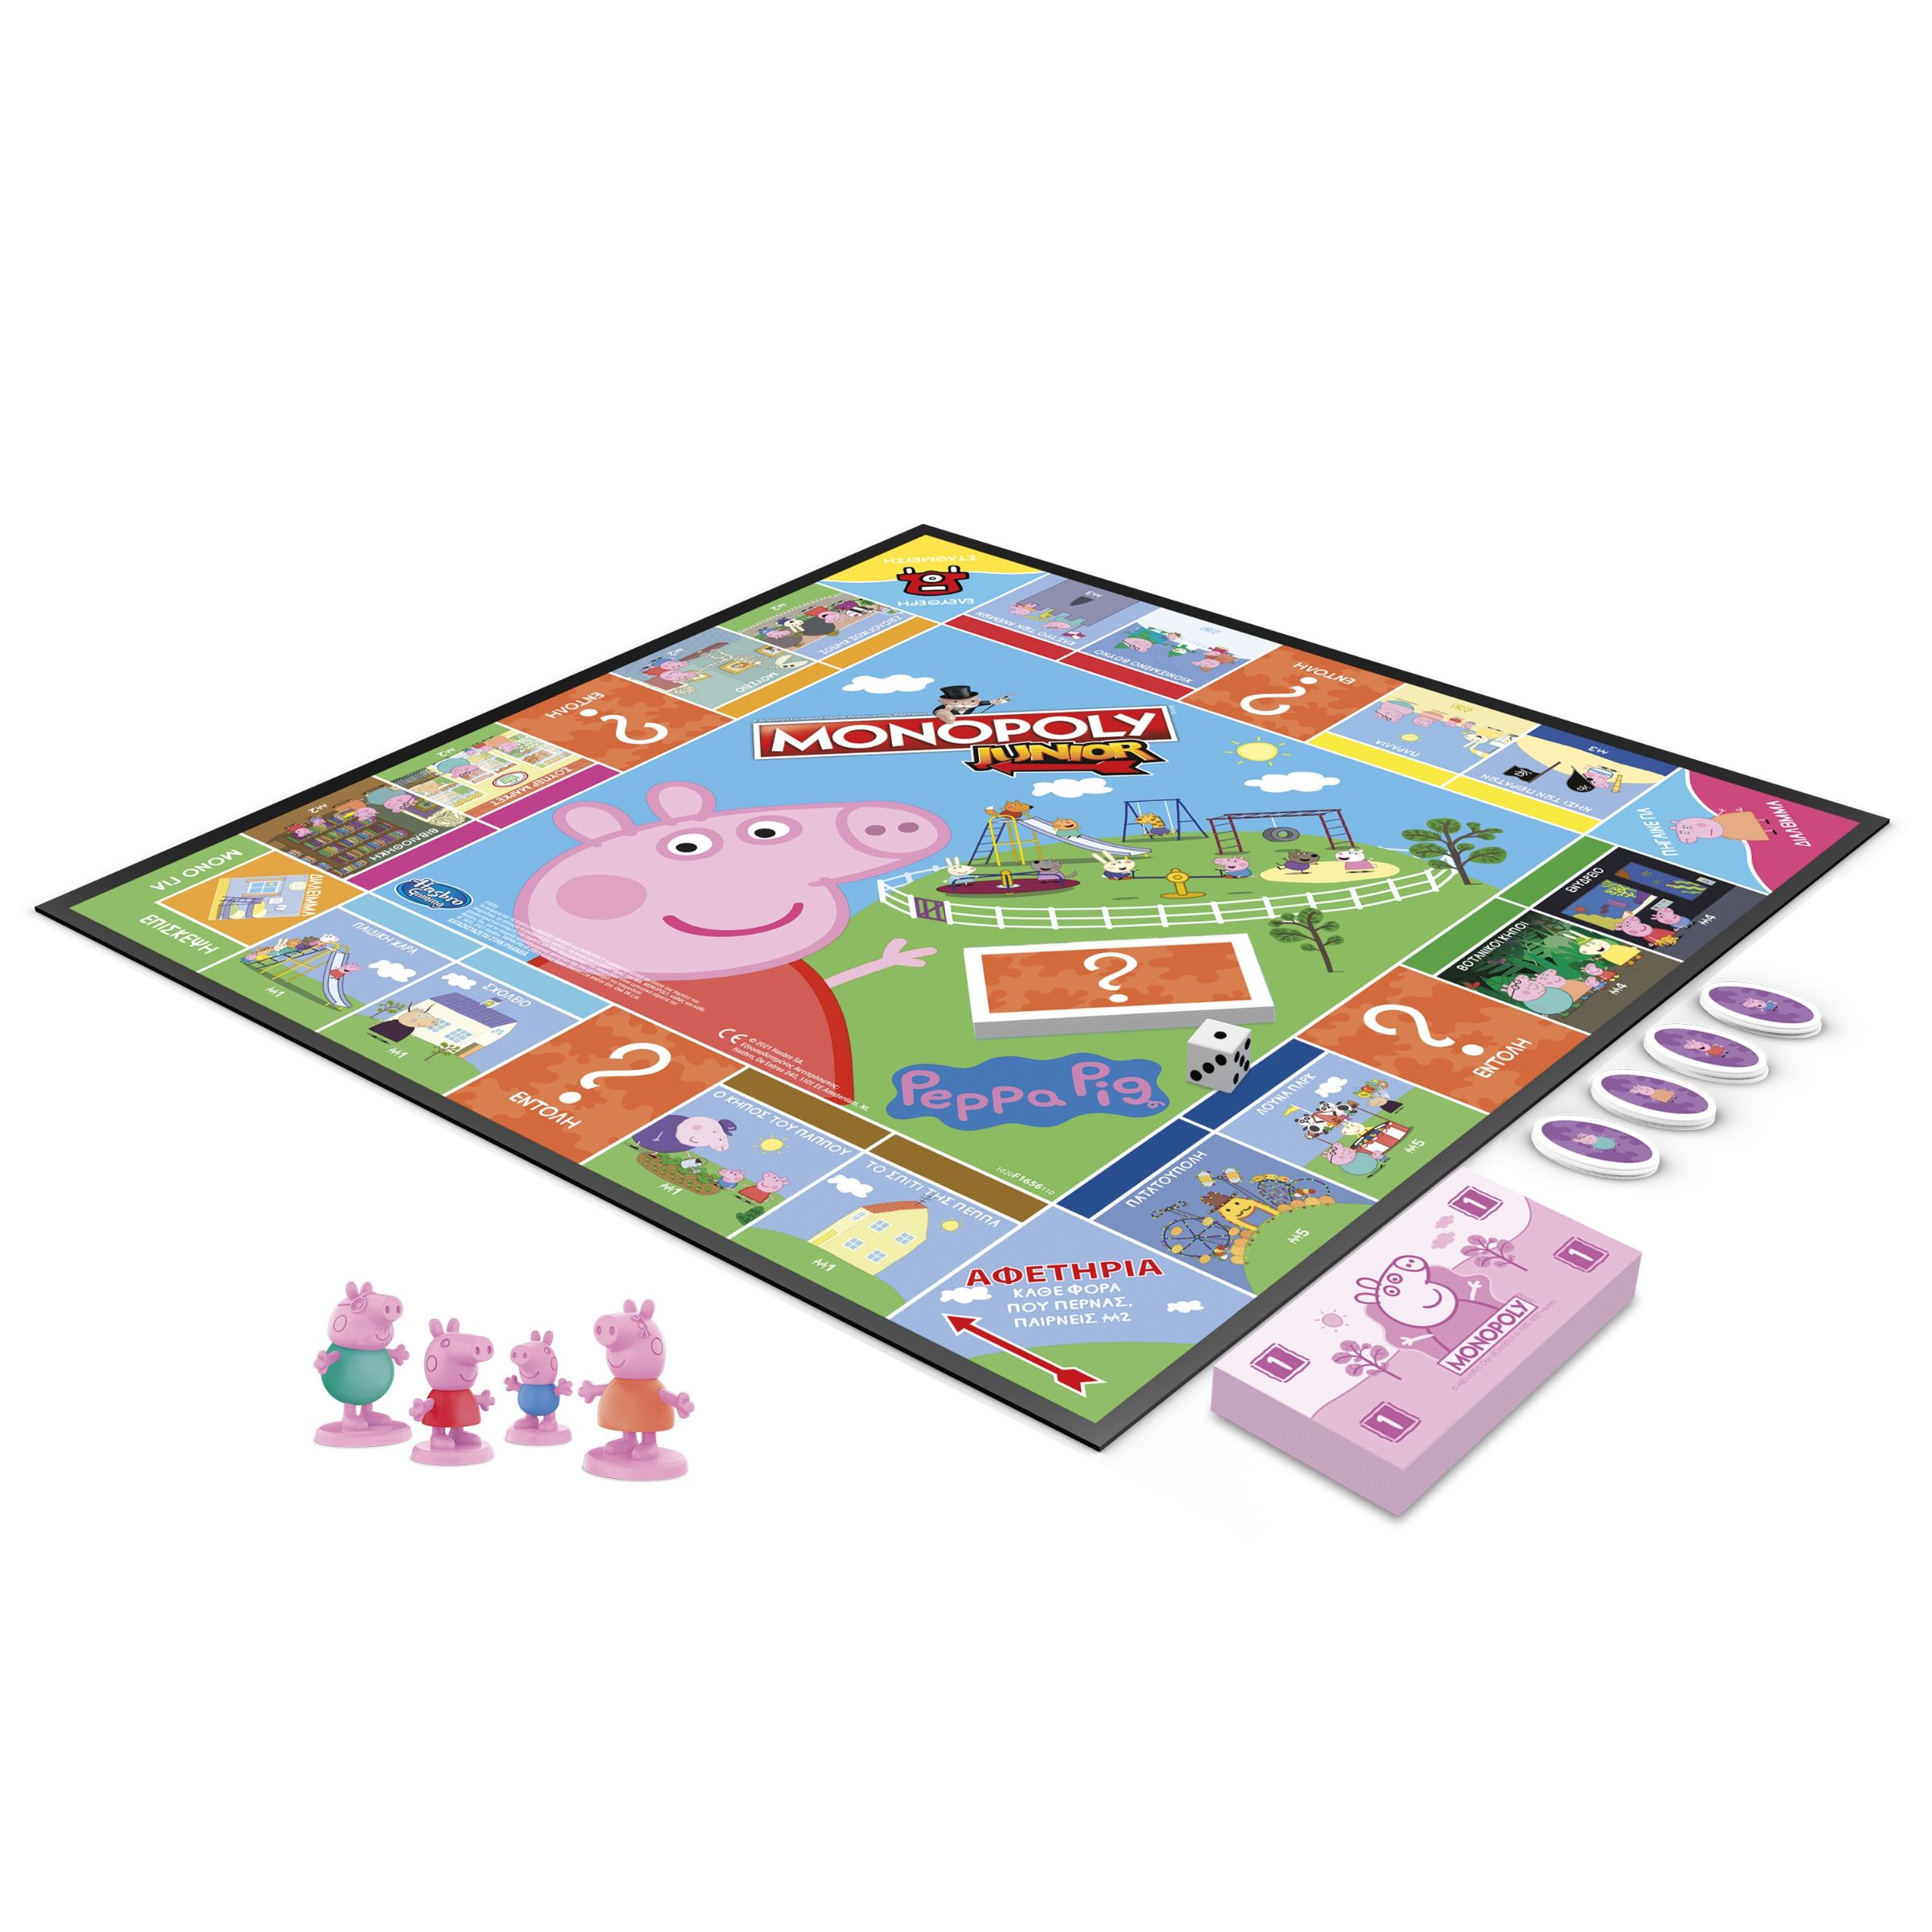 Monopoly Junior Game: Peppa Pig Edition F1656 - Hasbro Gaming, Monopoly